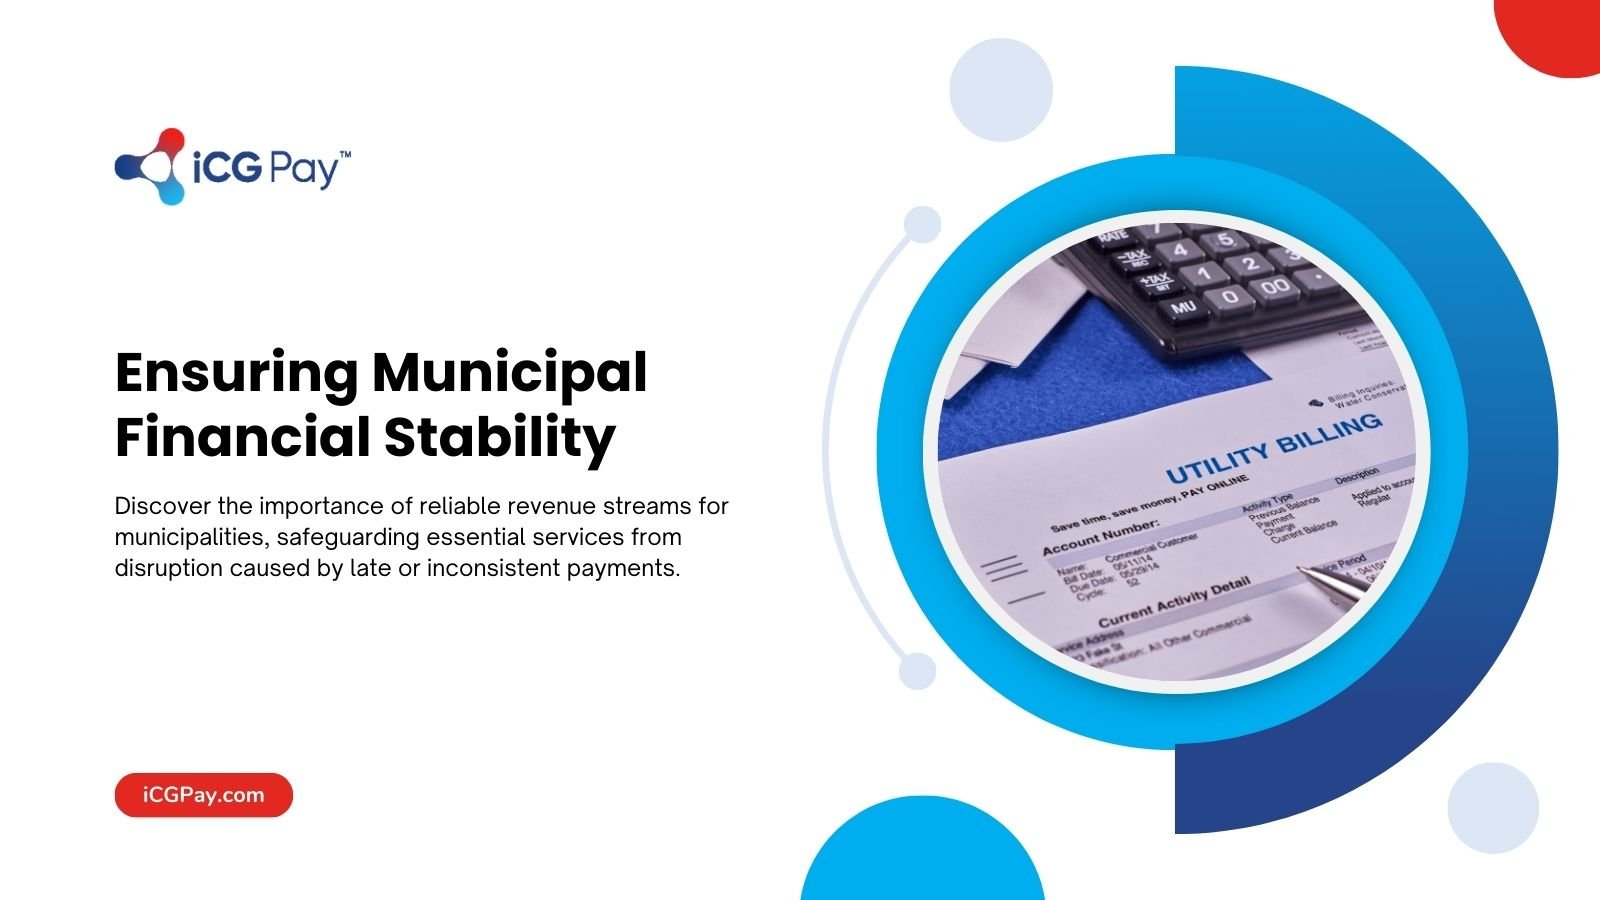 Enhance municipal stability